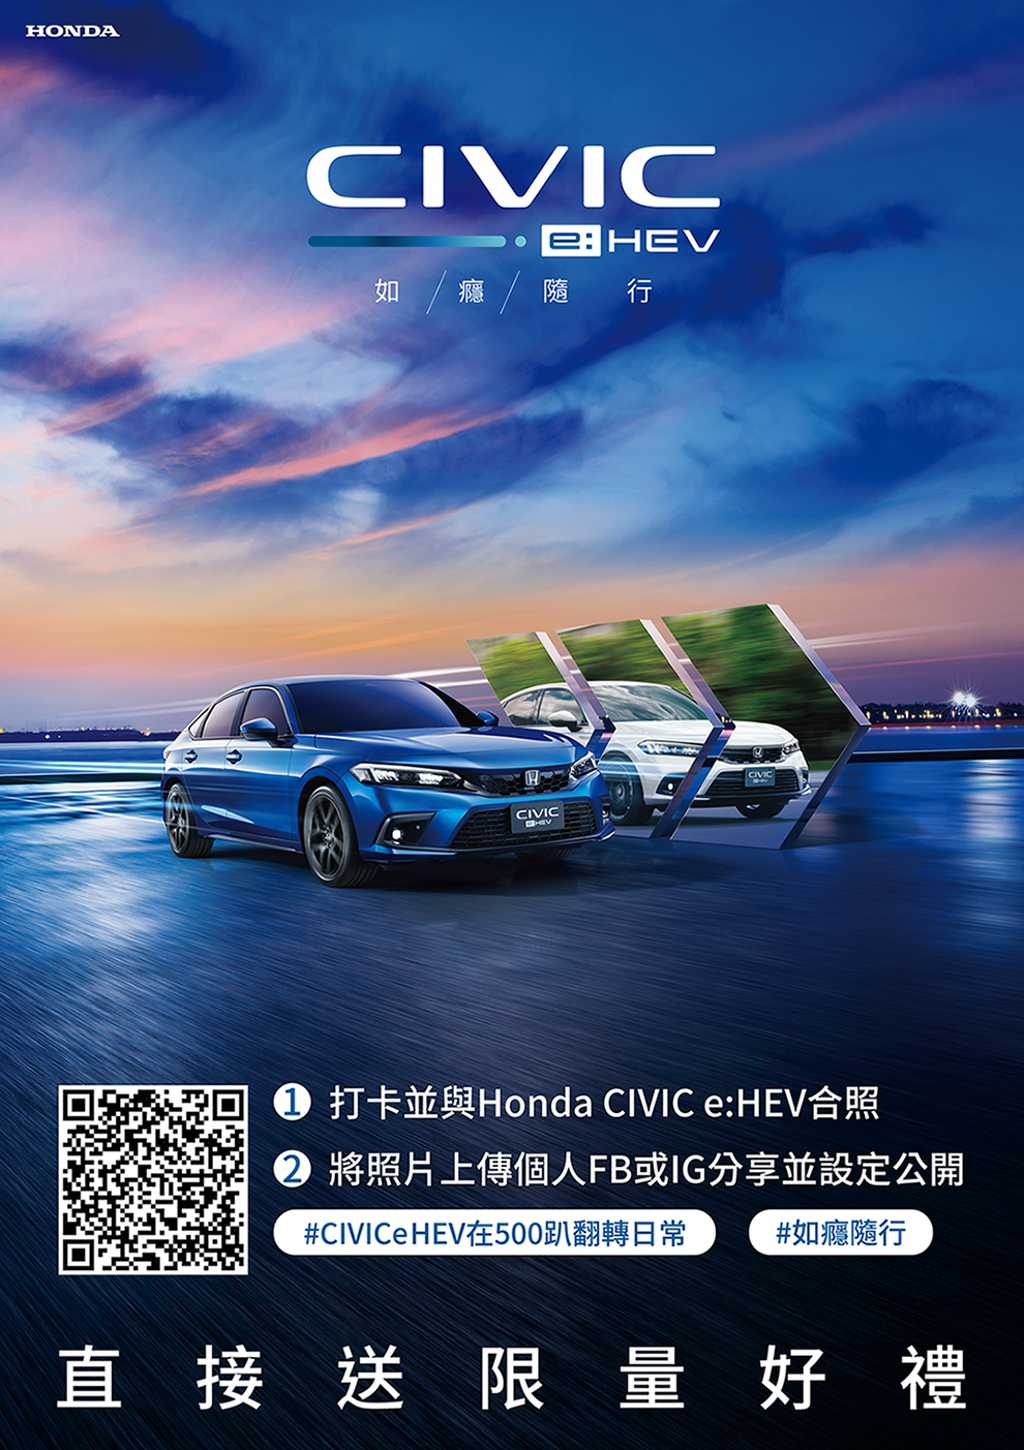 Honda CIVIC e:HEV將在12/1~12/3現身500趴活動 歡迎到場拍照打卡領取Honda限量好禮(圖/Carstuff)